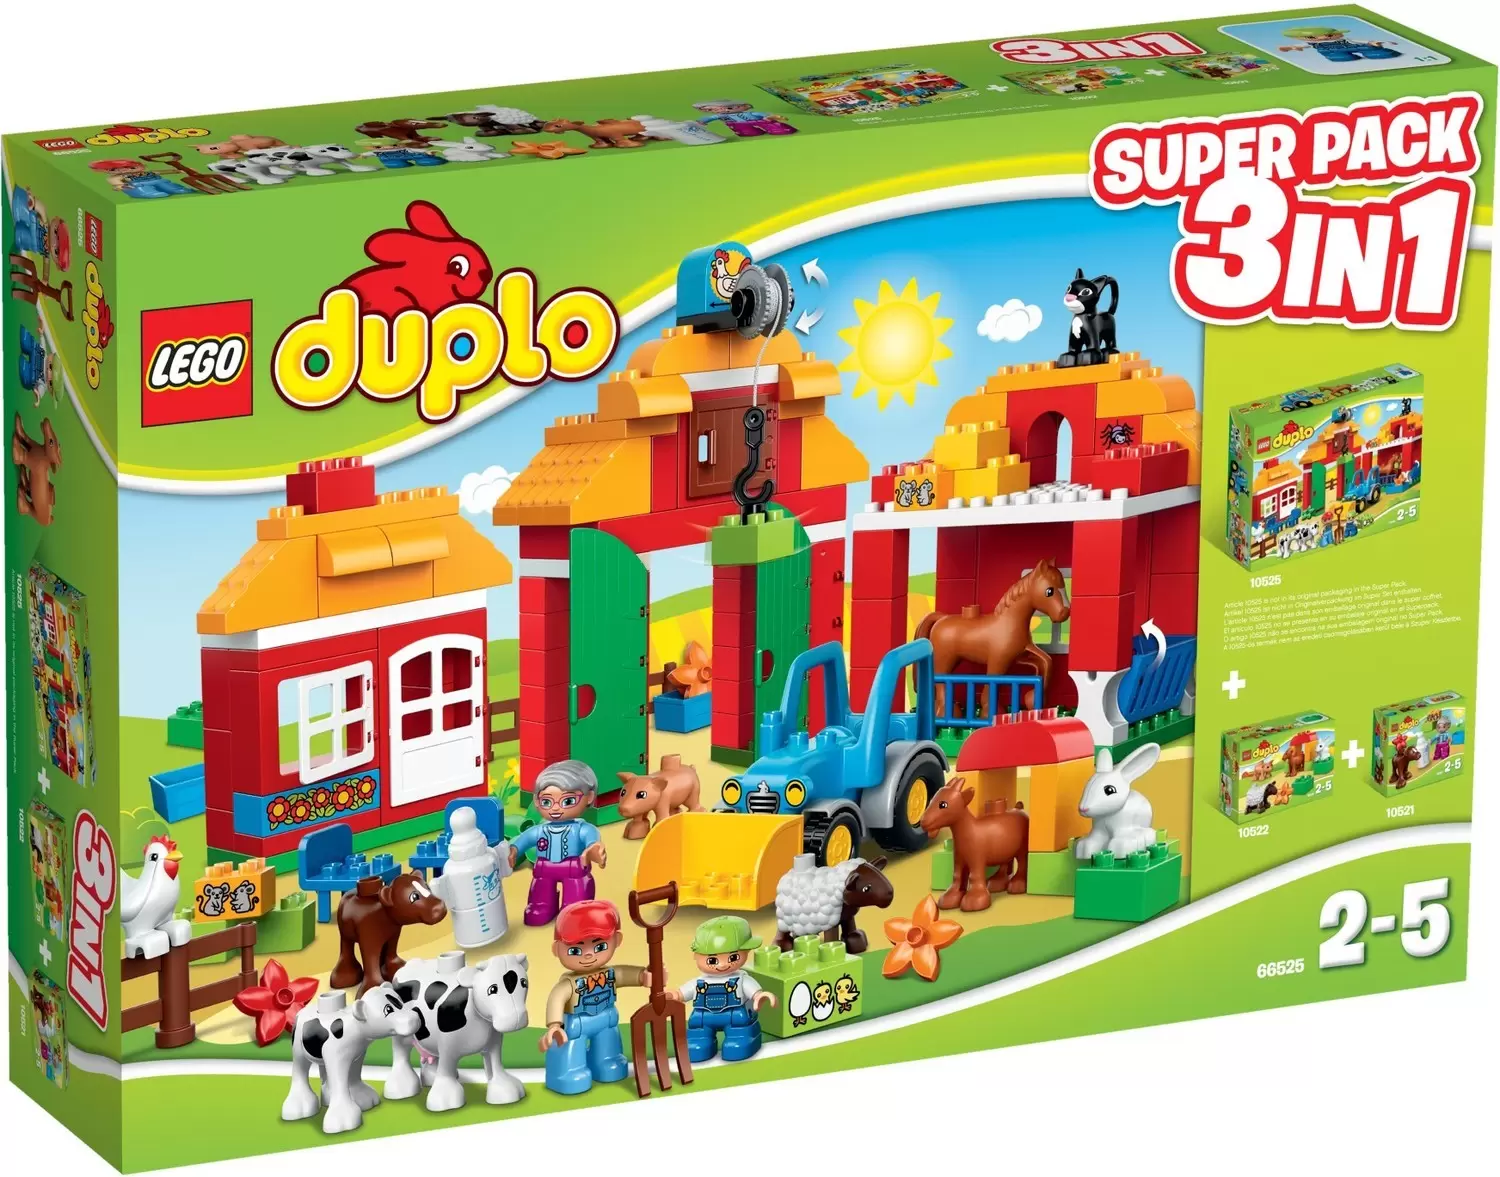 LEGO Duplo - Farm Super Pack 3-in-1